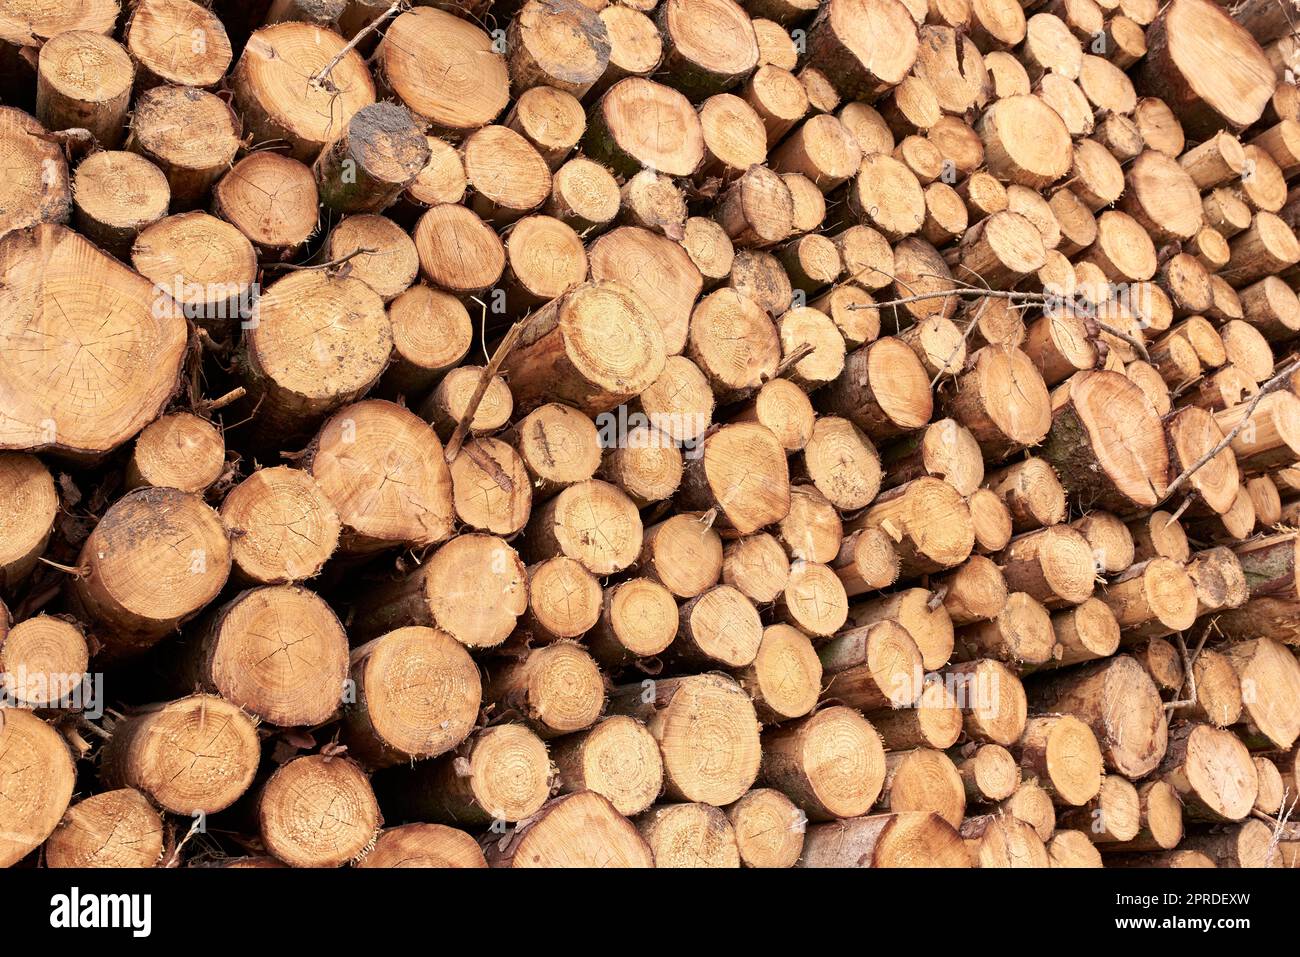 Woodpile - Lumber Industry. Lumber industry - lot of woodpiles. Stock Photo